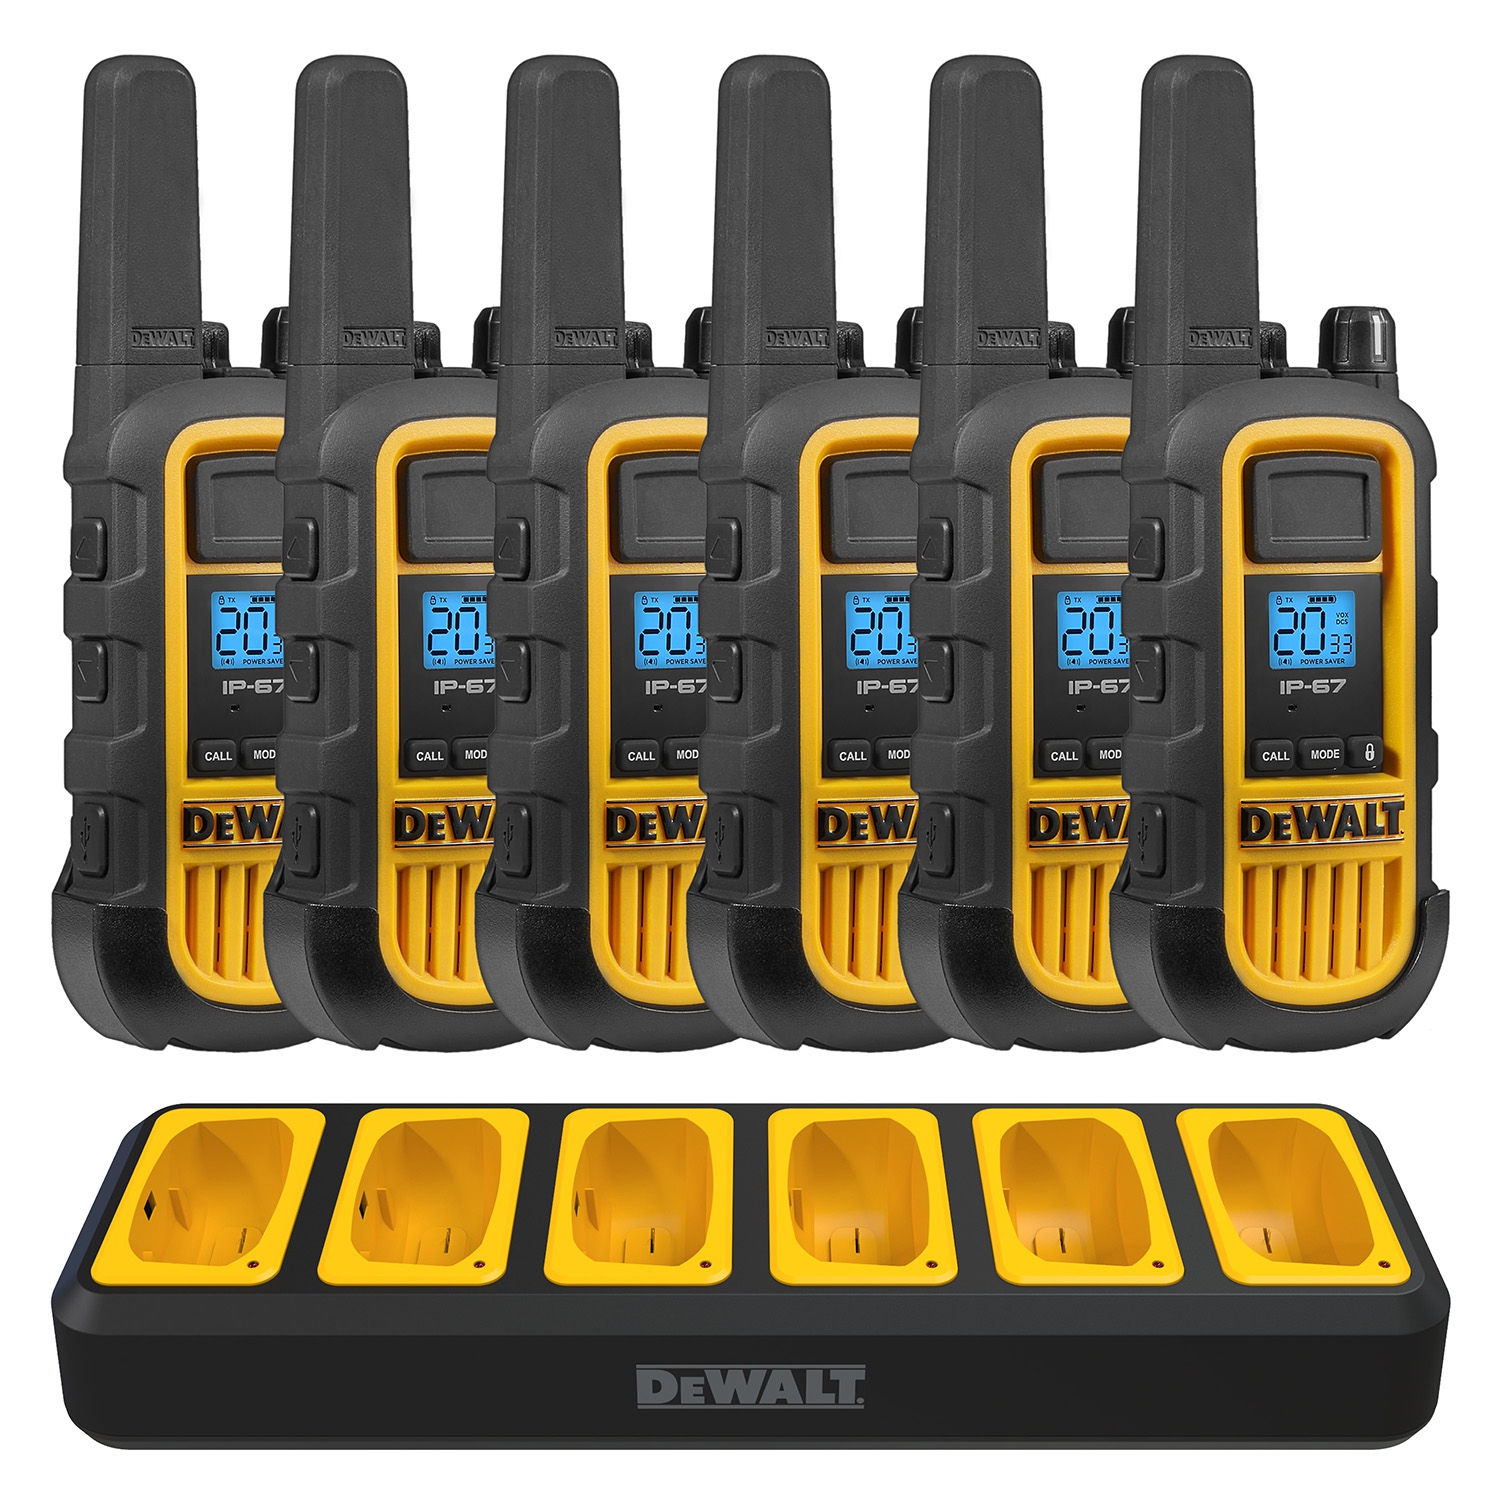 6 Dewalt DXFRS800 Walkie Talkies - 2 Watt, Heavy Duty, Waterproof, 22 Channels, Long Range & Rechargeable Two-Way Radio Set with VOX, 6 Pack of Radios + Charger